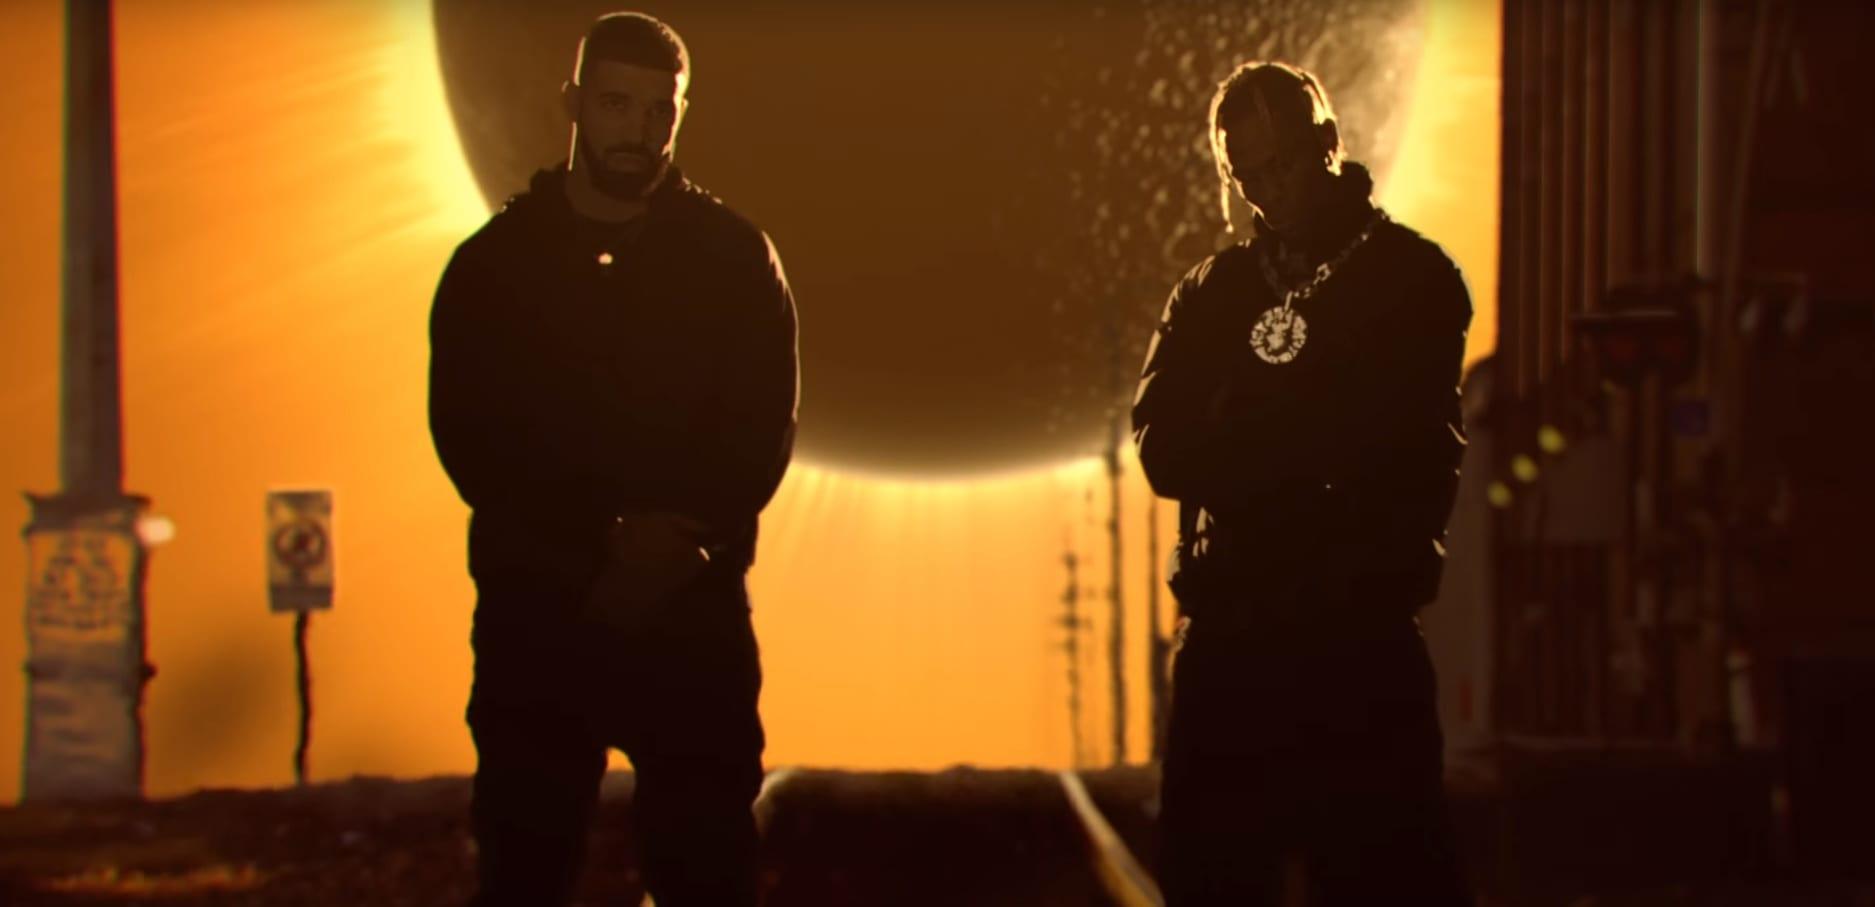 Watch Travis Scott and Drake's New “Sicko Mode” Video